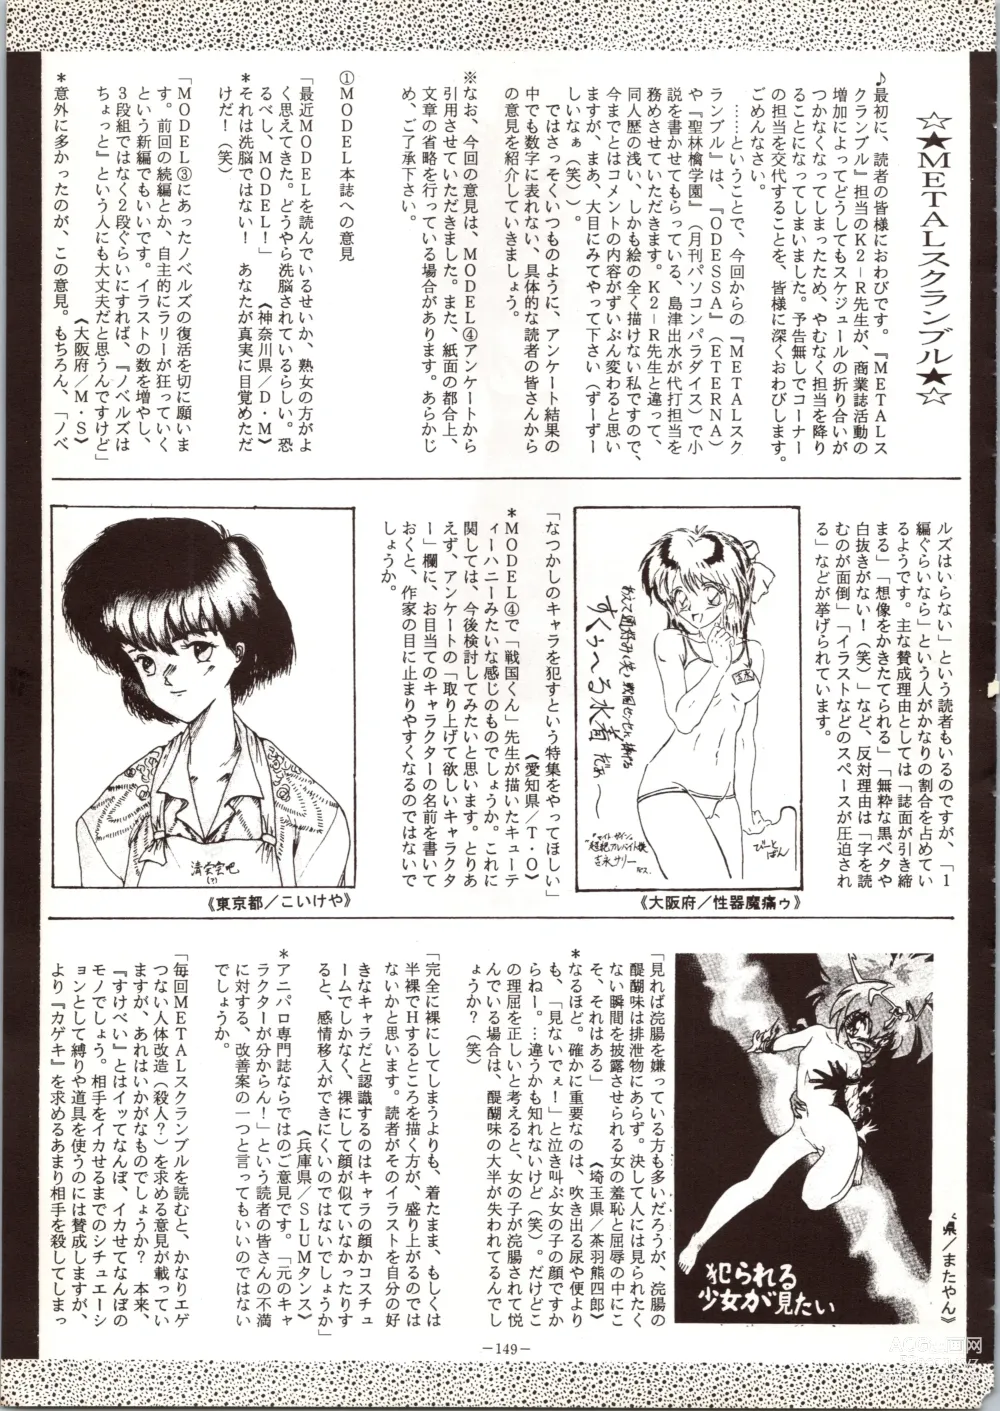 Page 149 of doujinshi MODEL 5